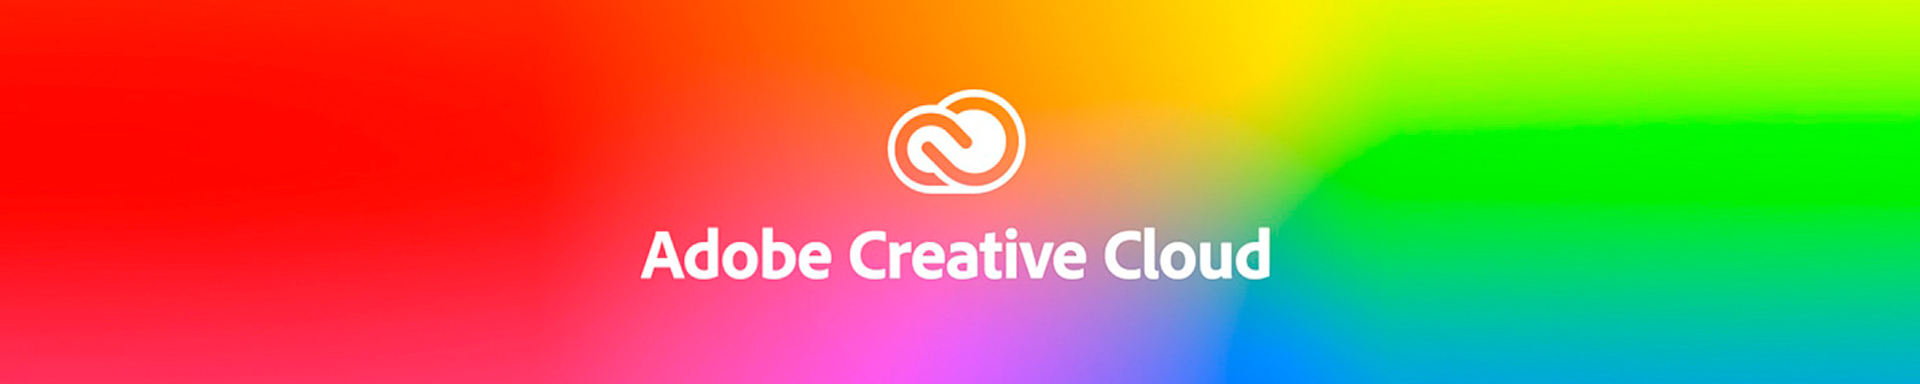 adobe_creative_cloud.png